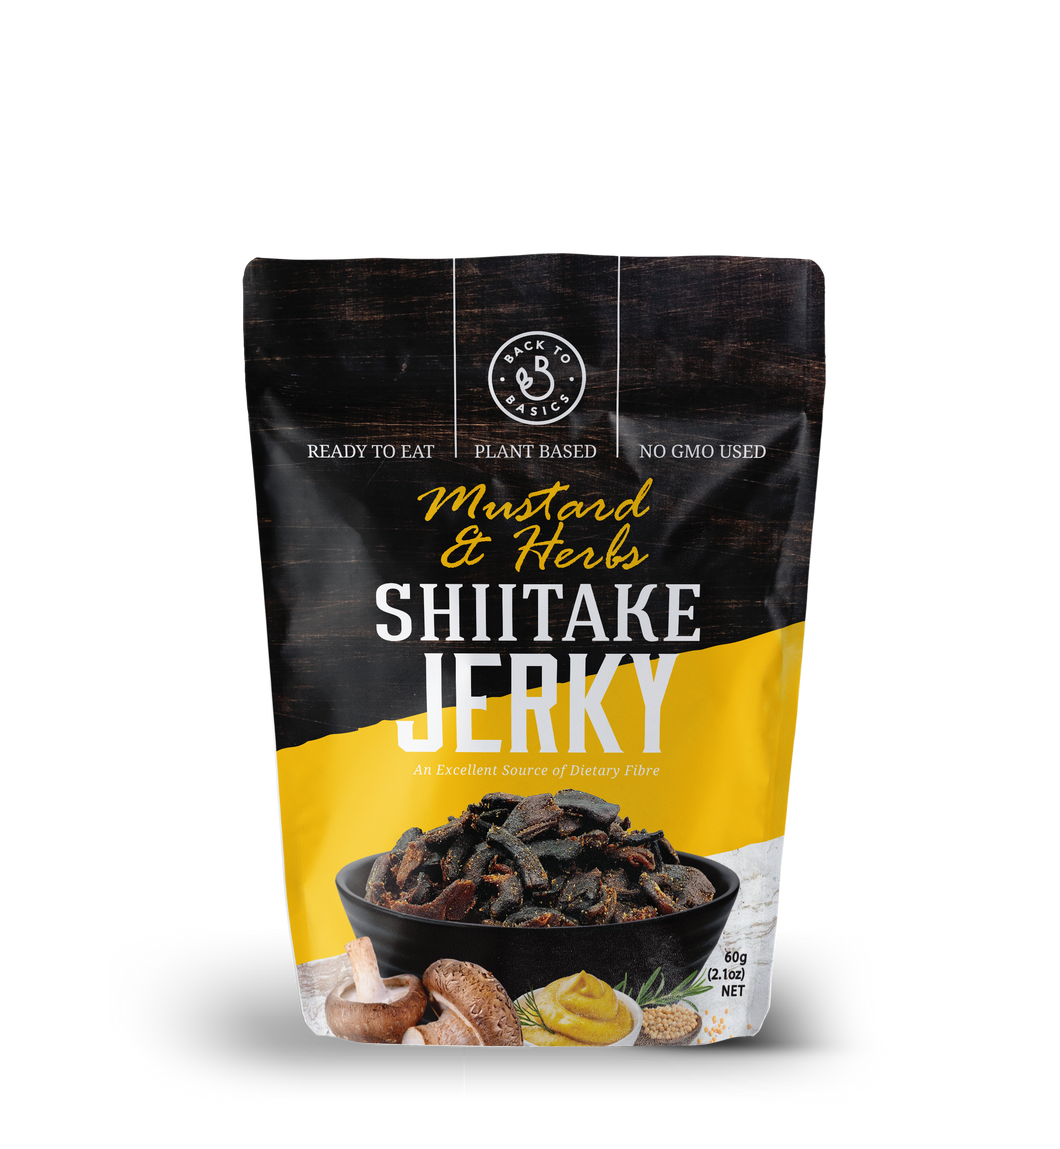 Shiitake Jerky, Mustard & Herbs 60g